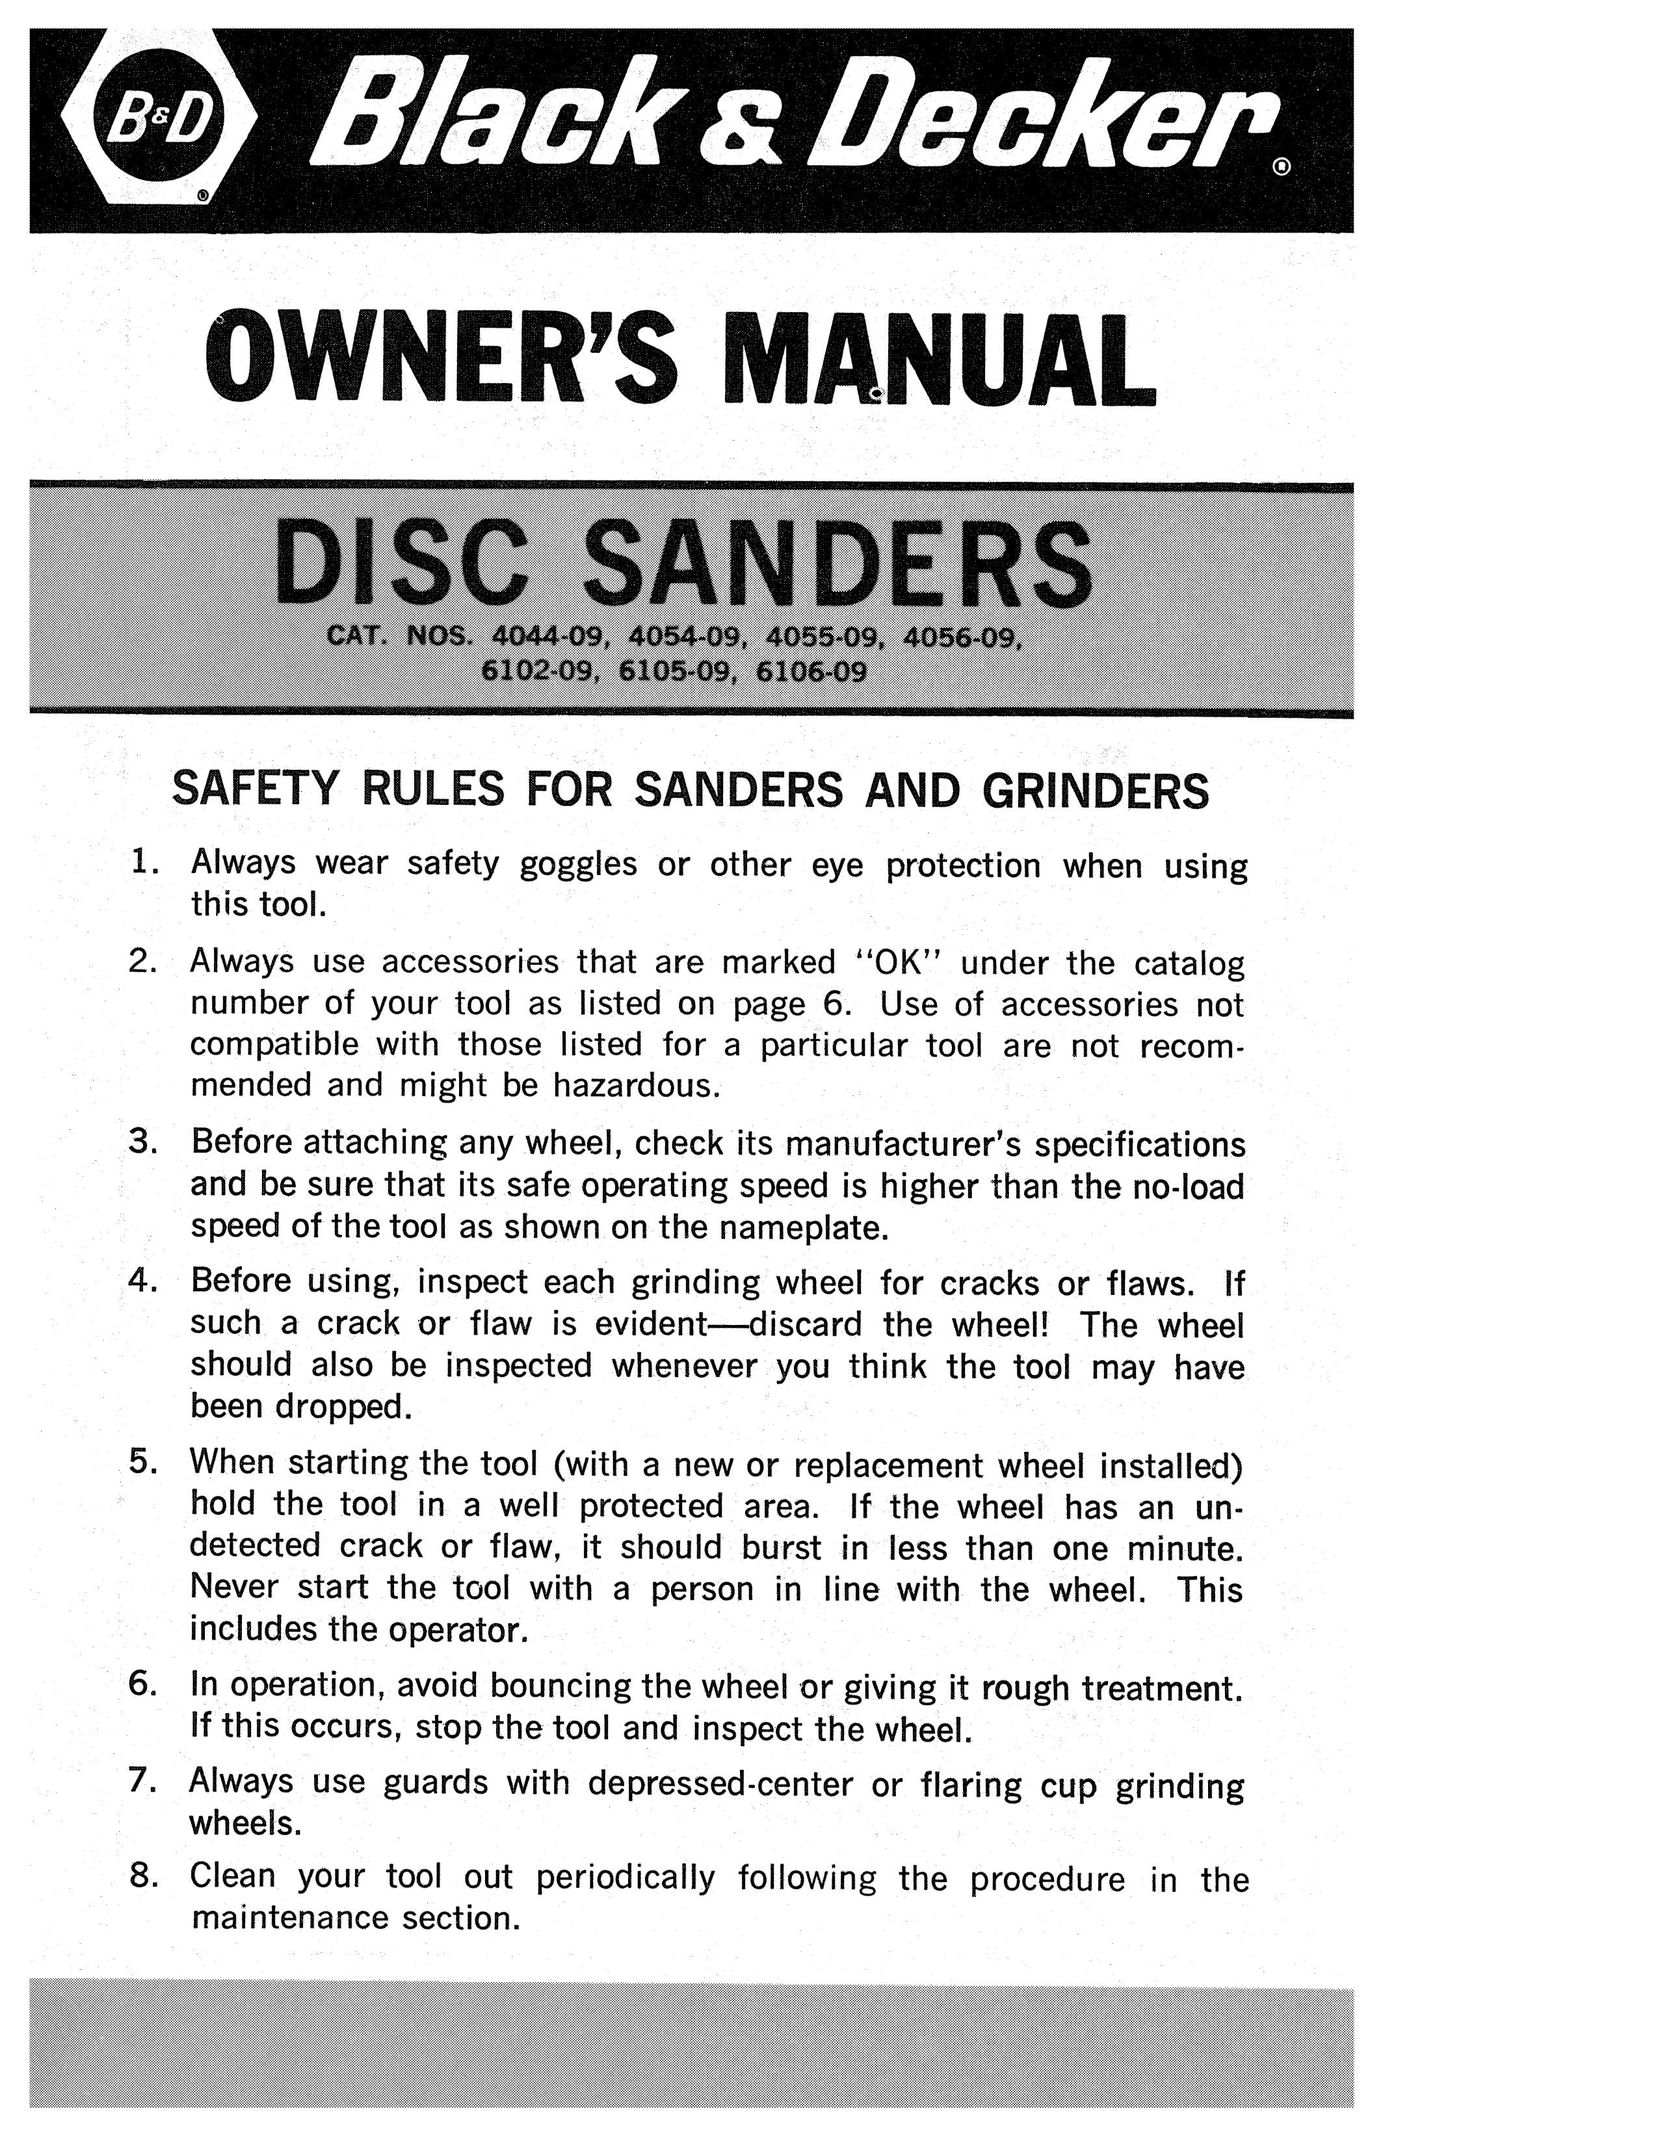 Black & Decker 4056-09 Sander User Manual